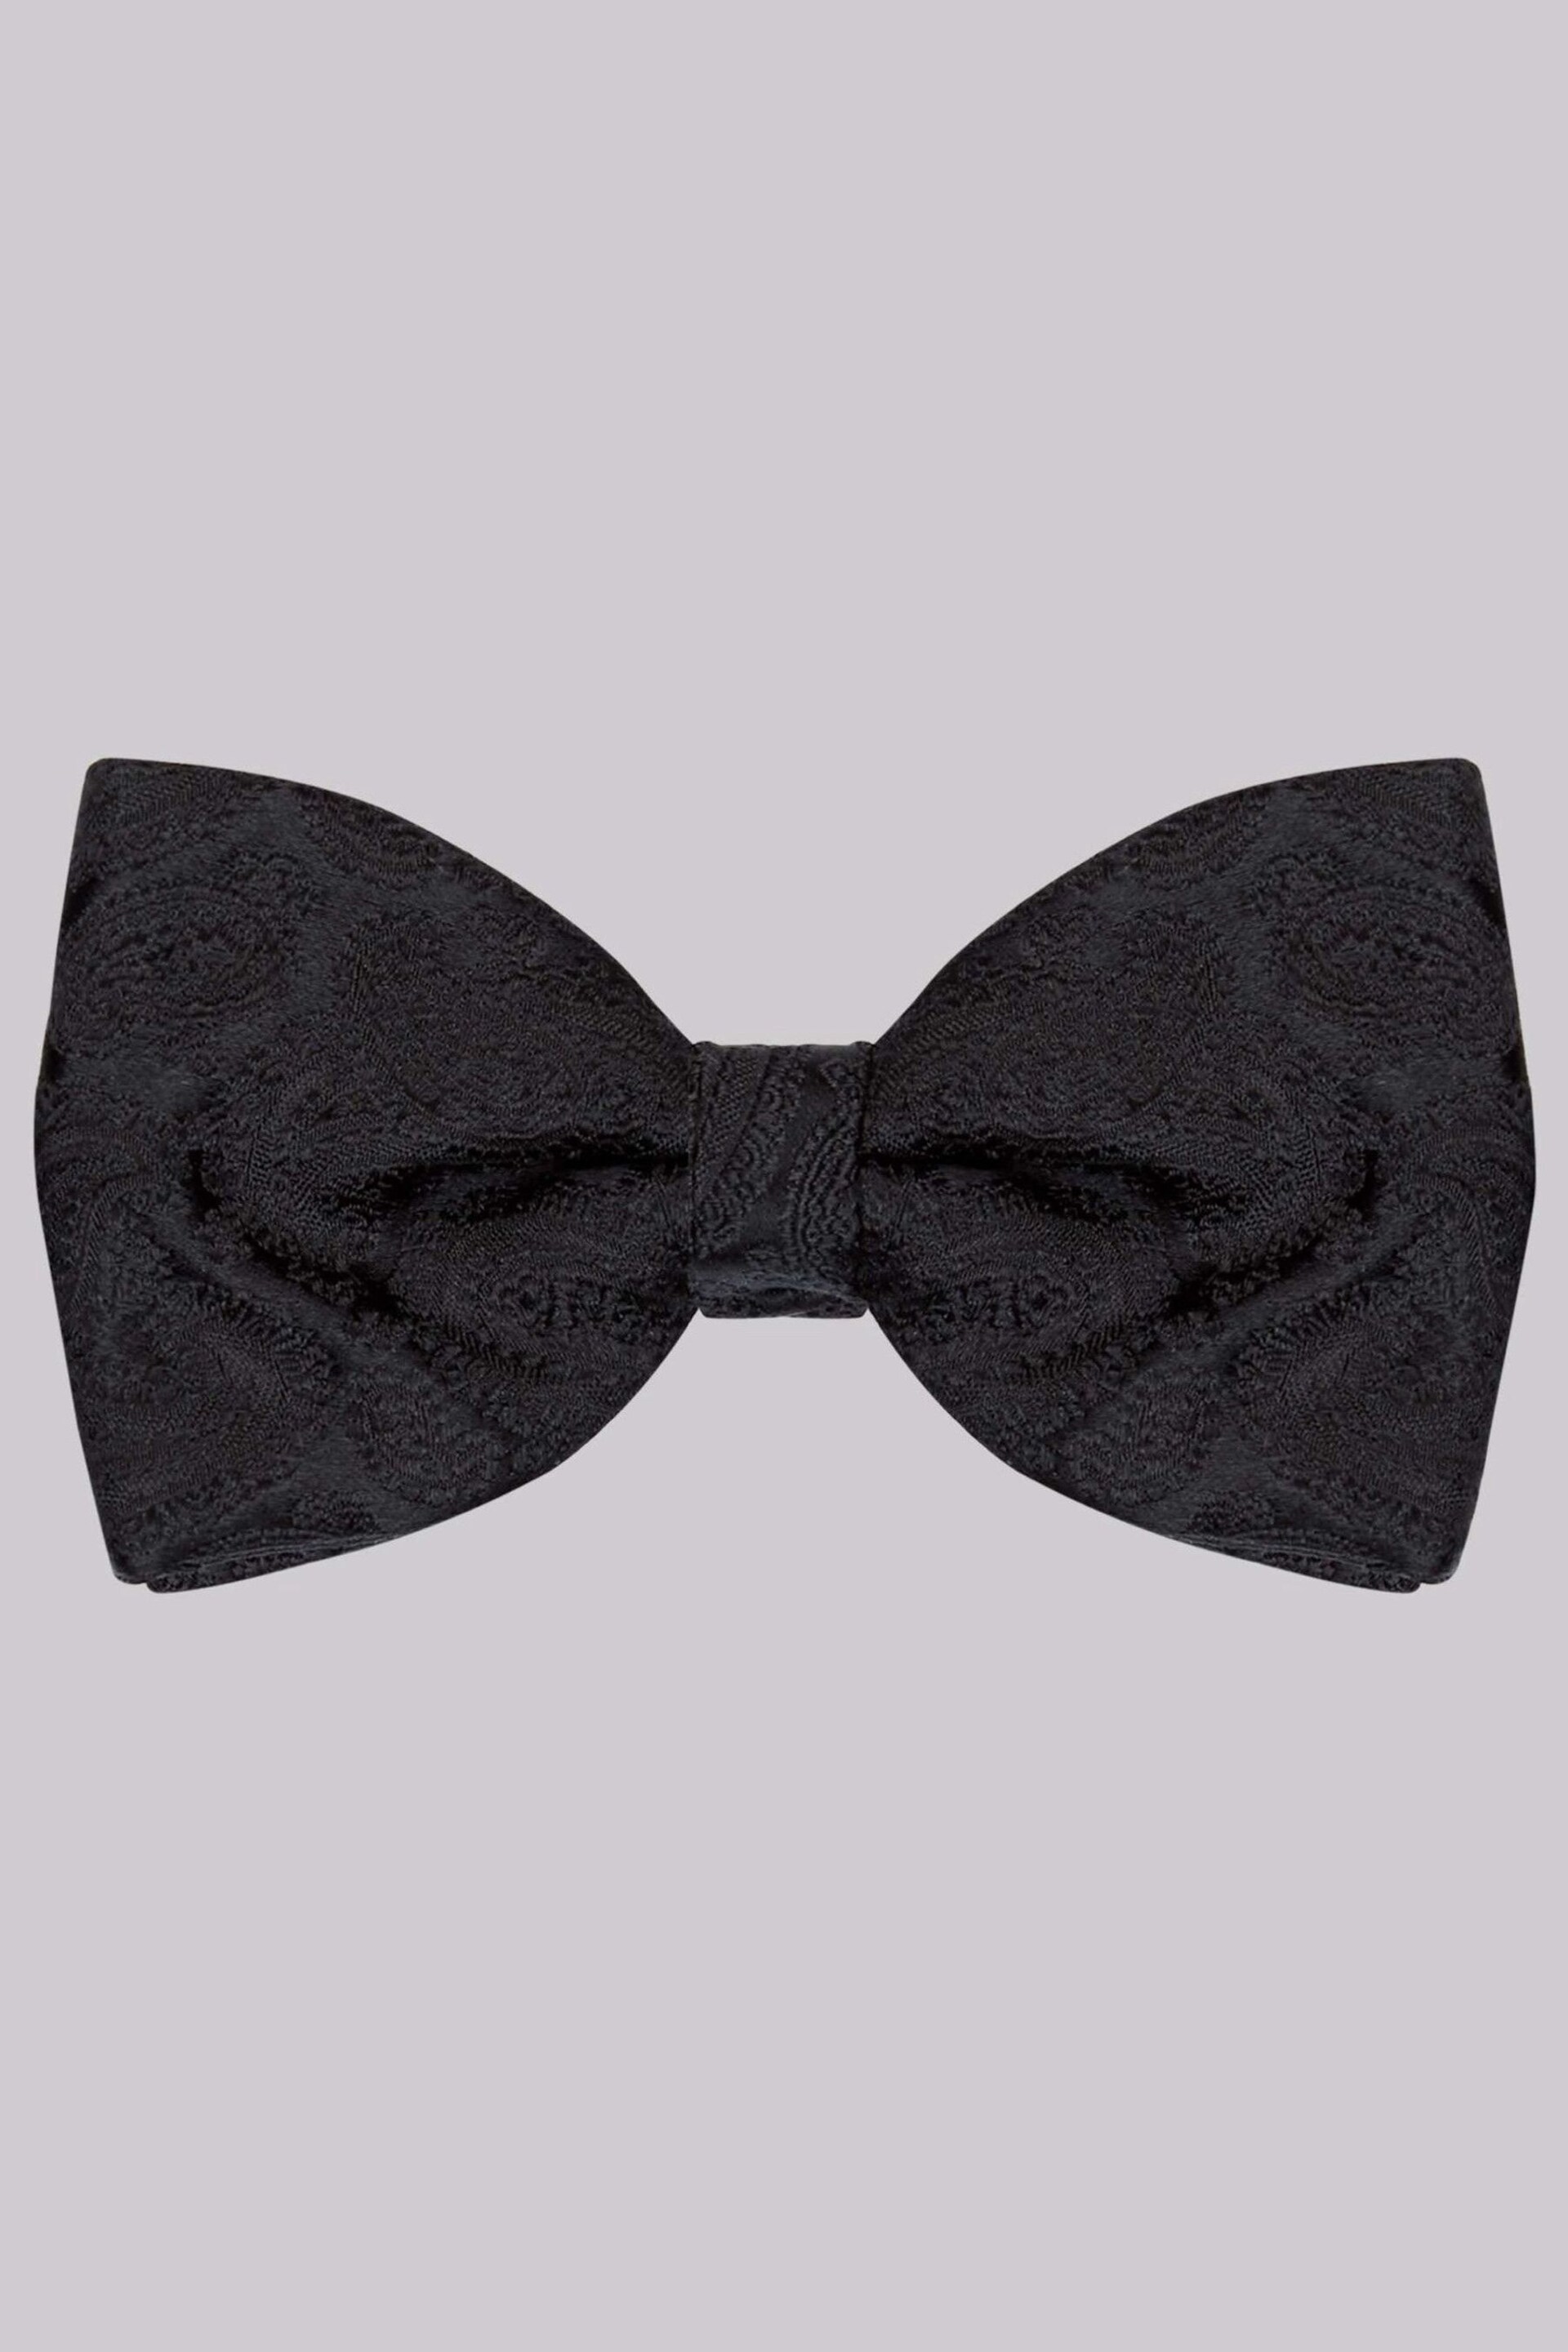 MOSS Black Paisley Silk Bow Tie - Image 2 of 2